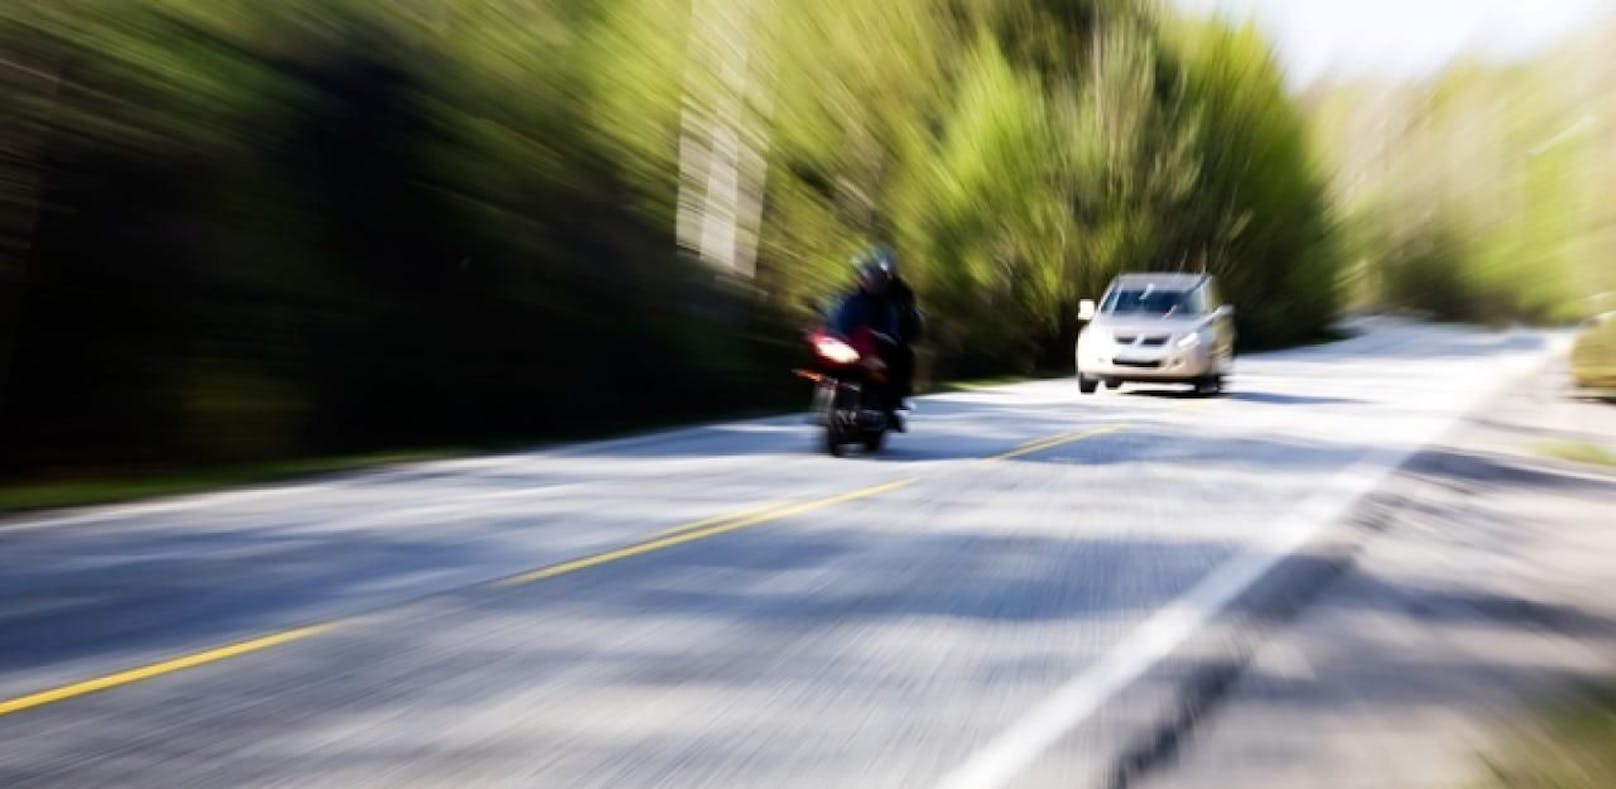 Motorrad-Fahrer knallte gegen Brückenpfeiler: tot